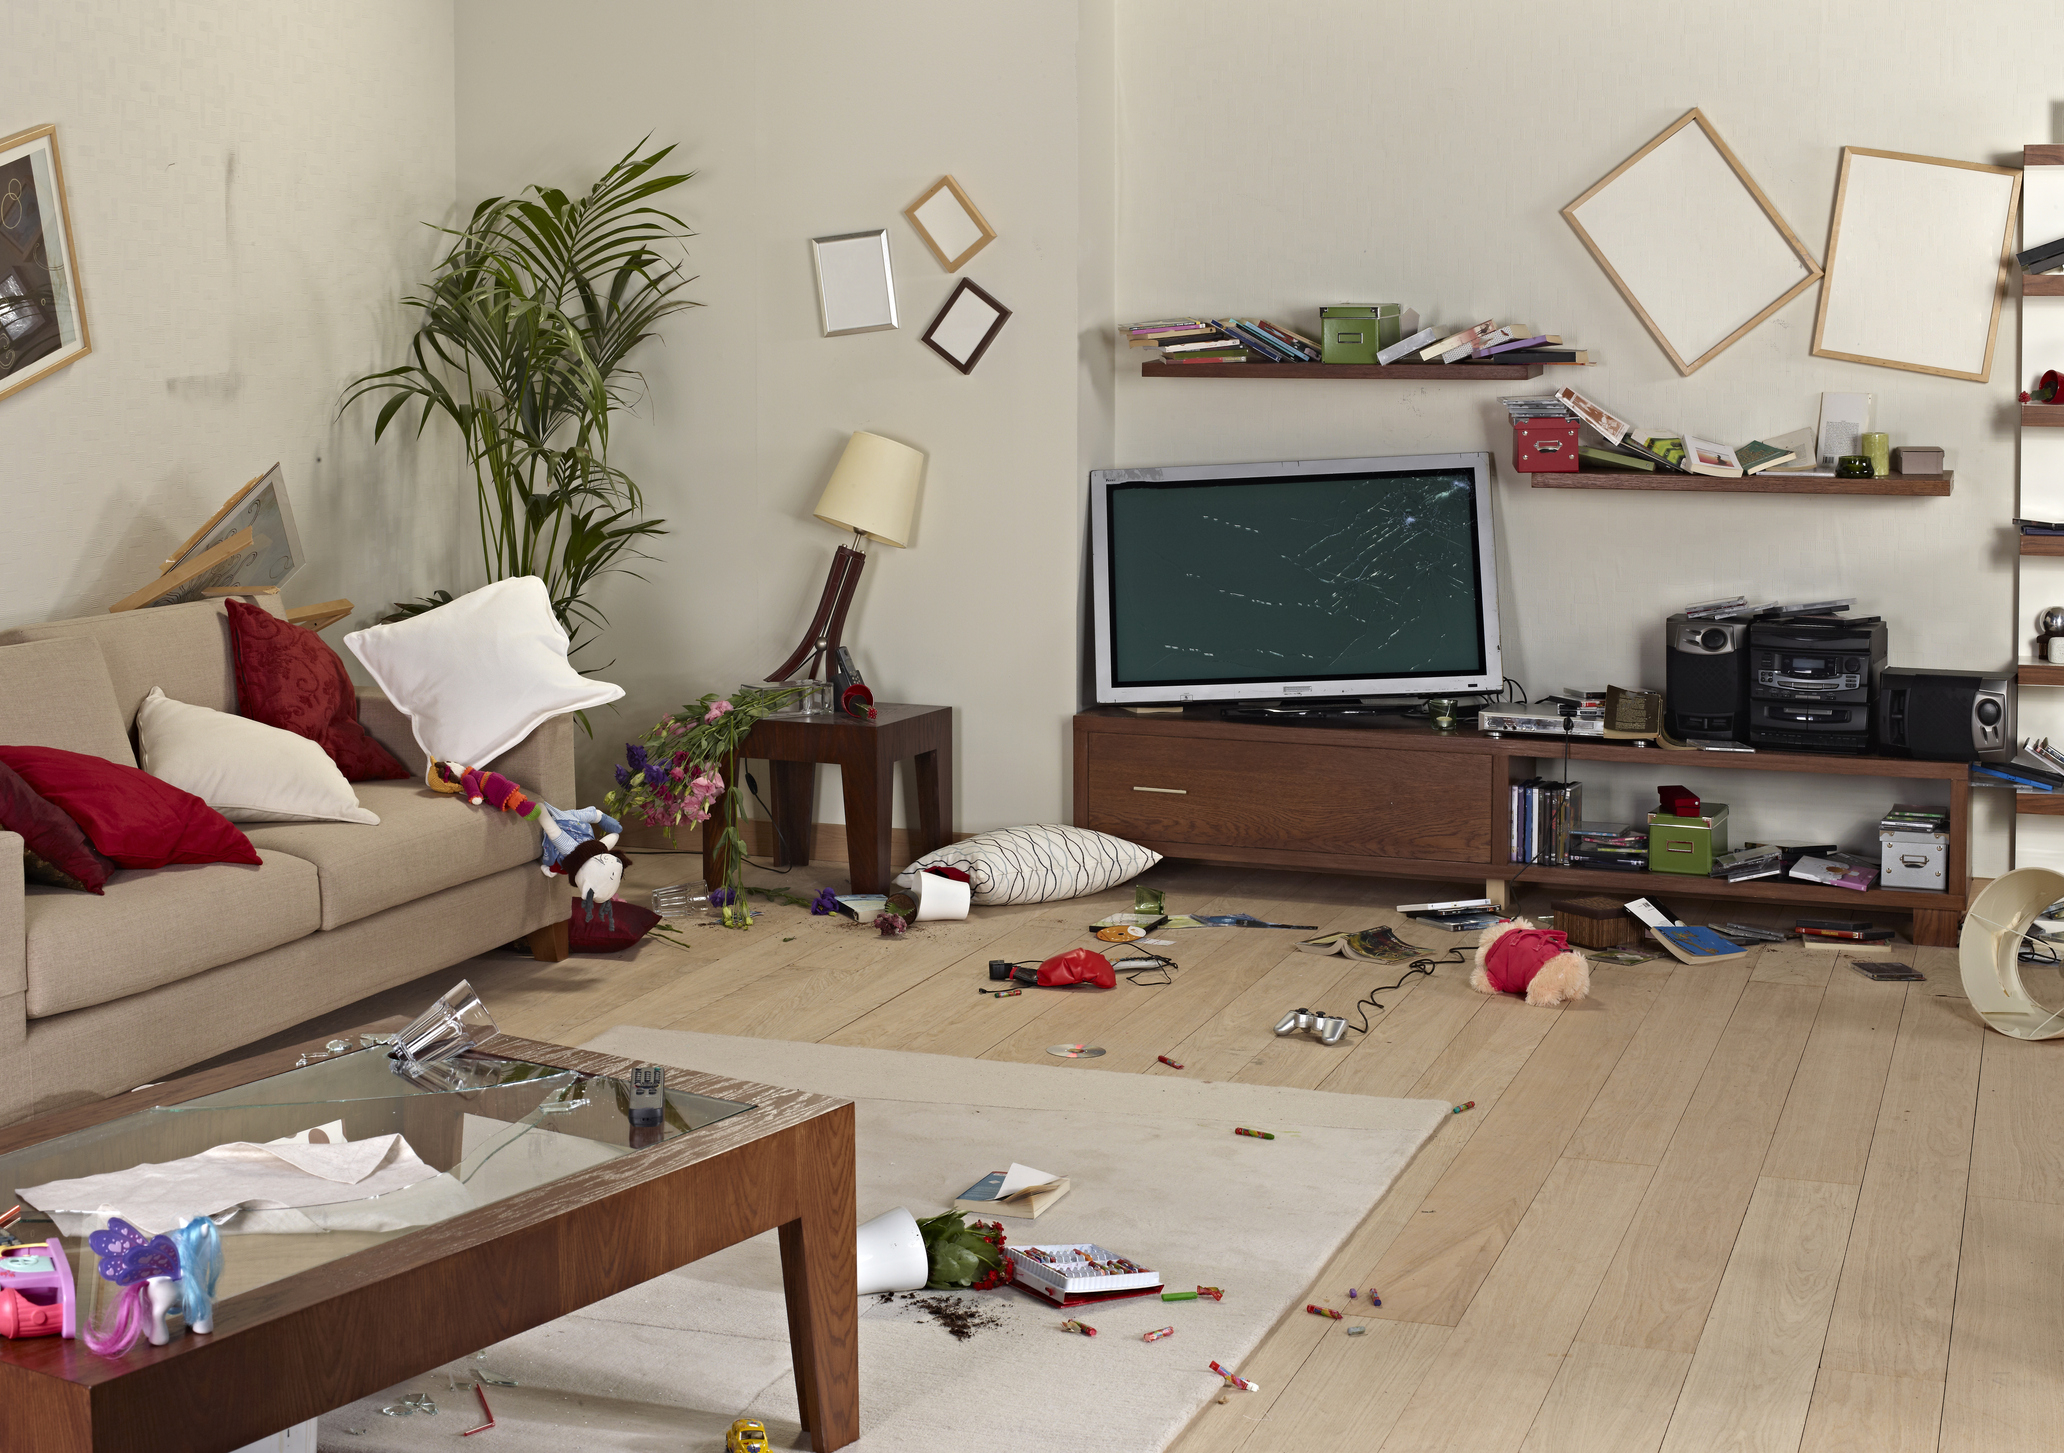 A destroyed living room